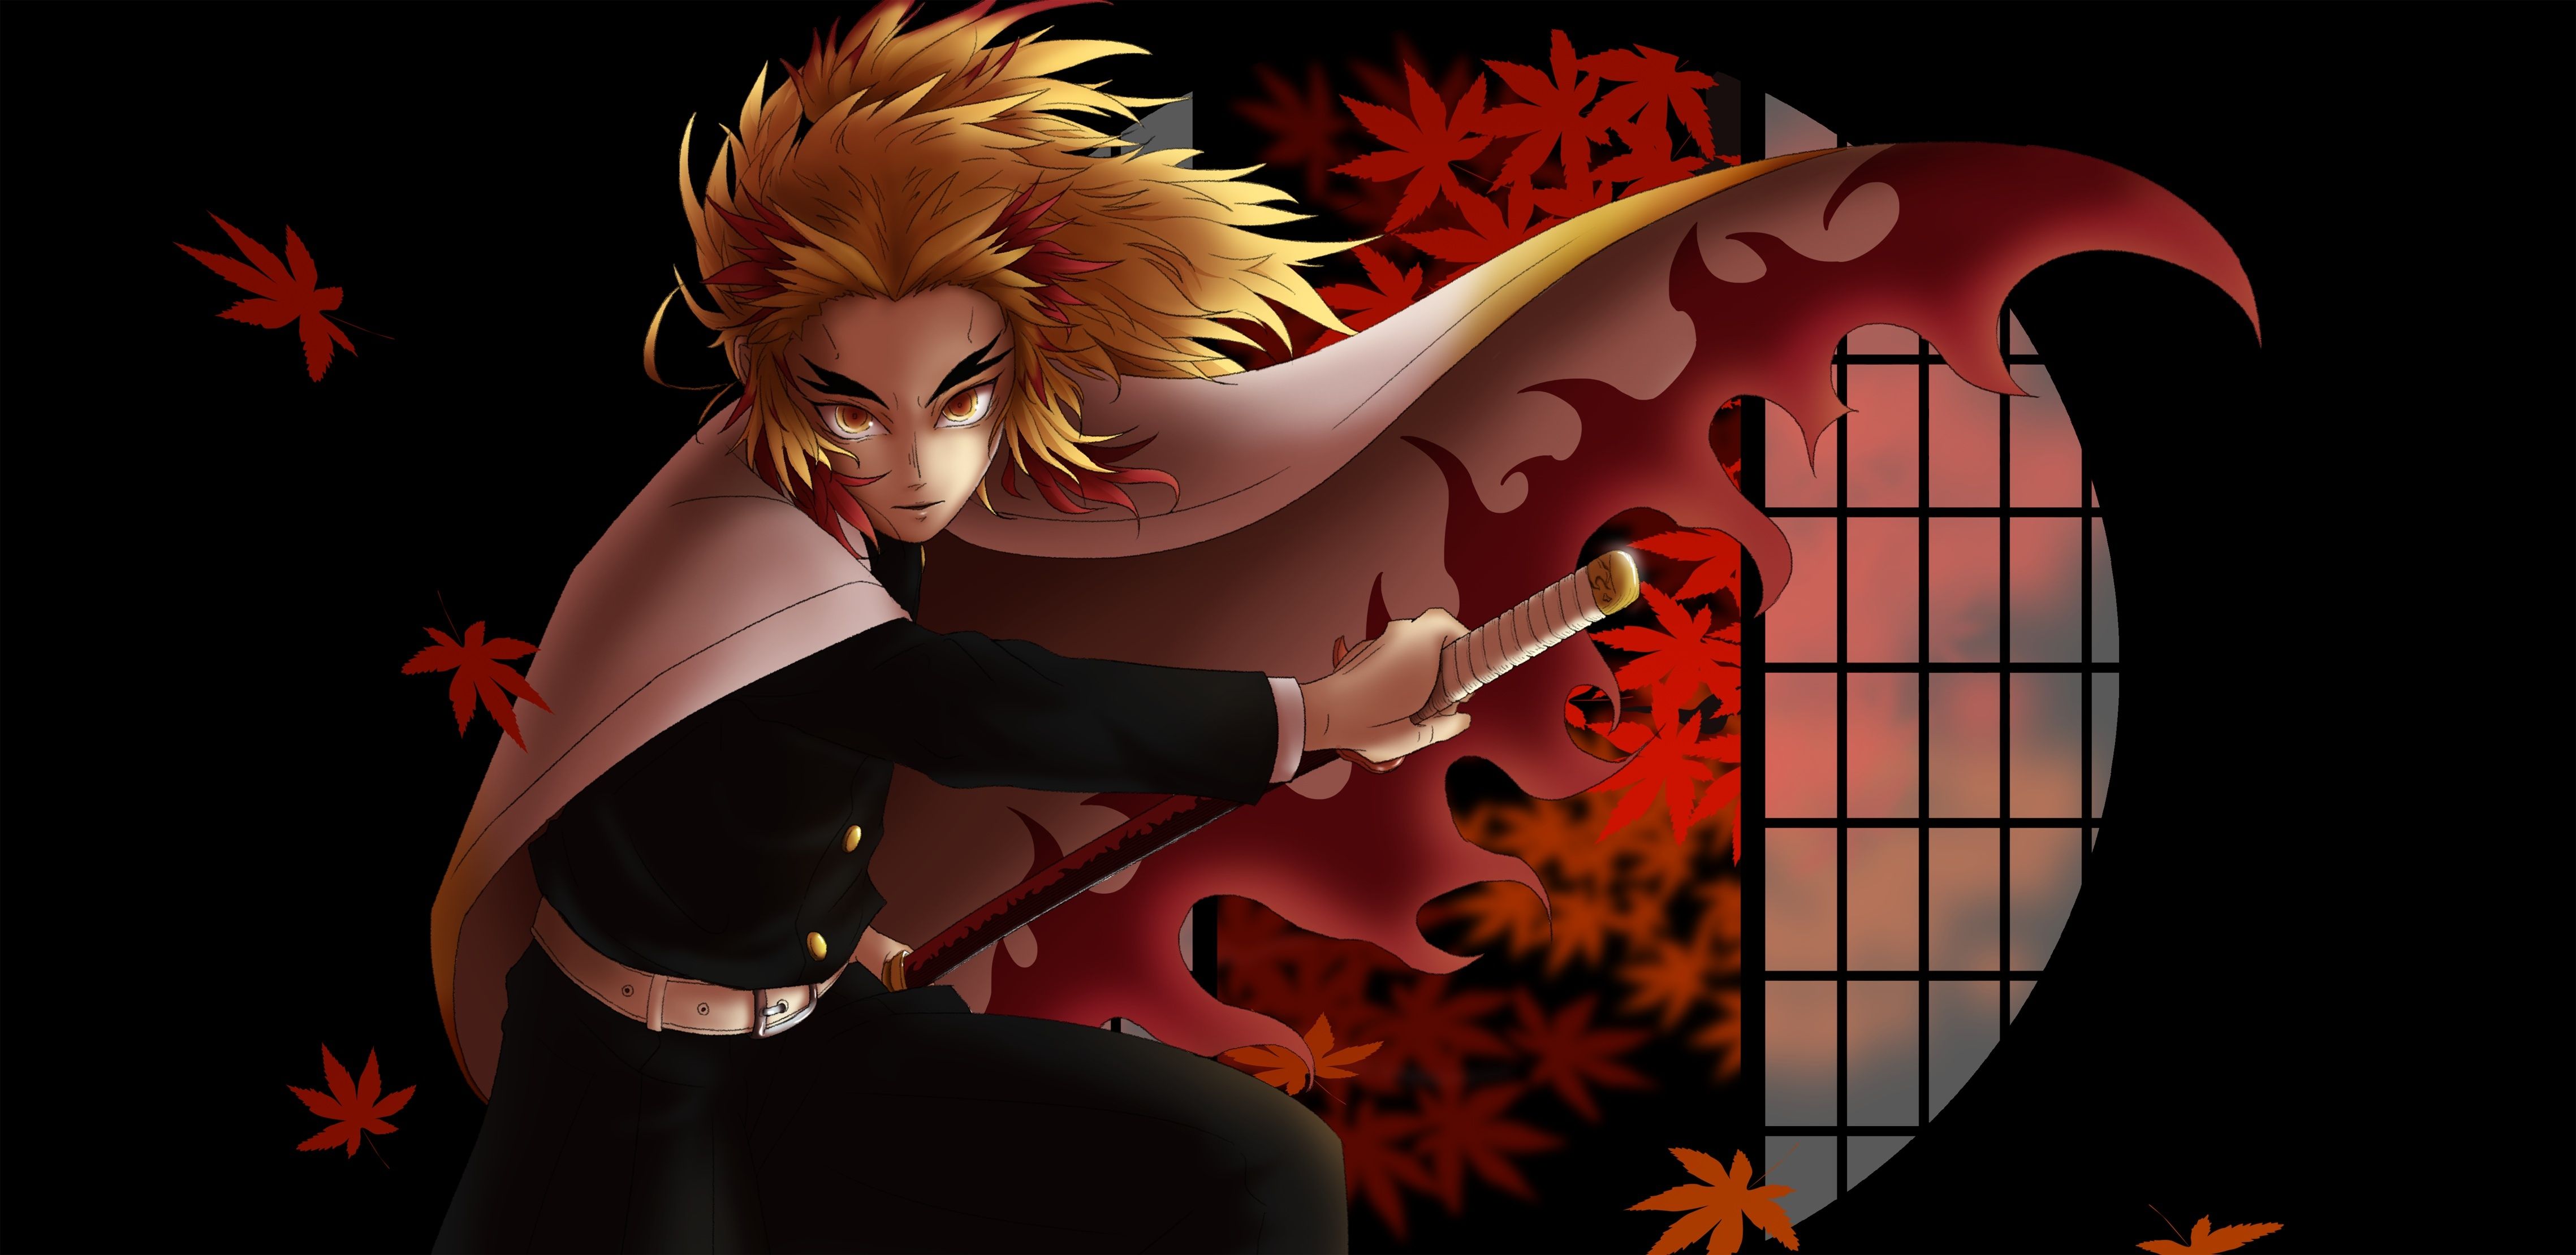 Rengoku Kyoujurou Wallpaper, HD Anime 4K Wallpaper, Image, Photo and Background